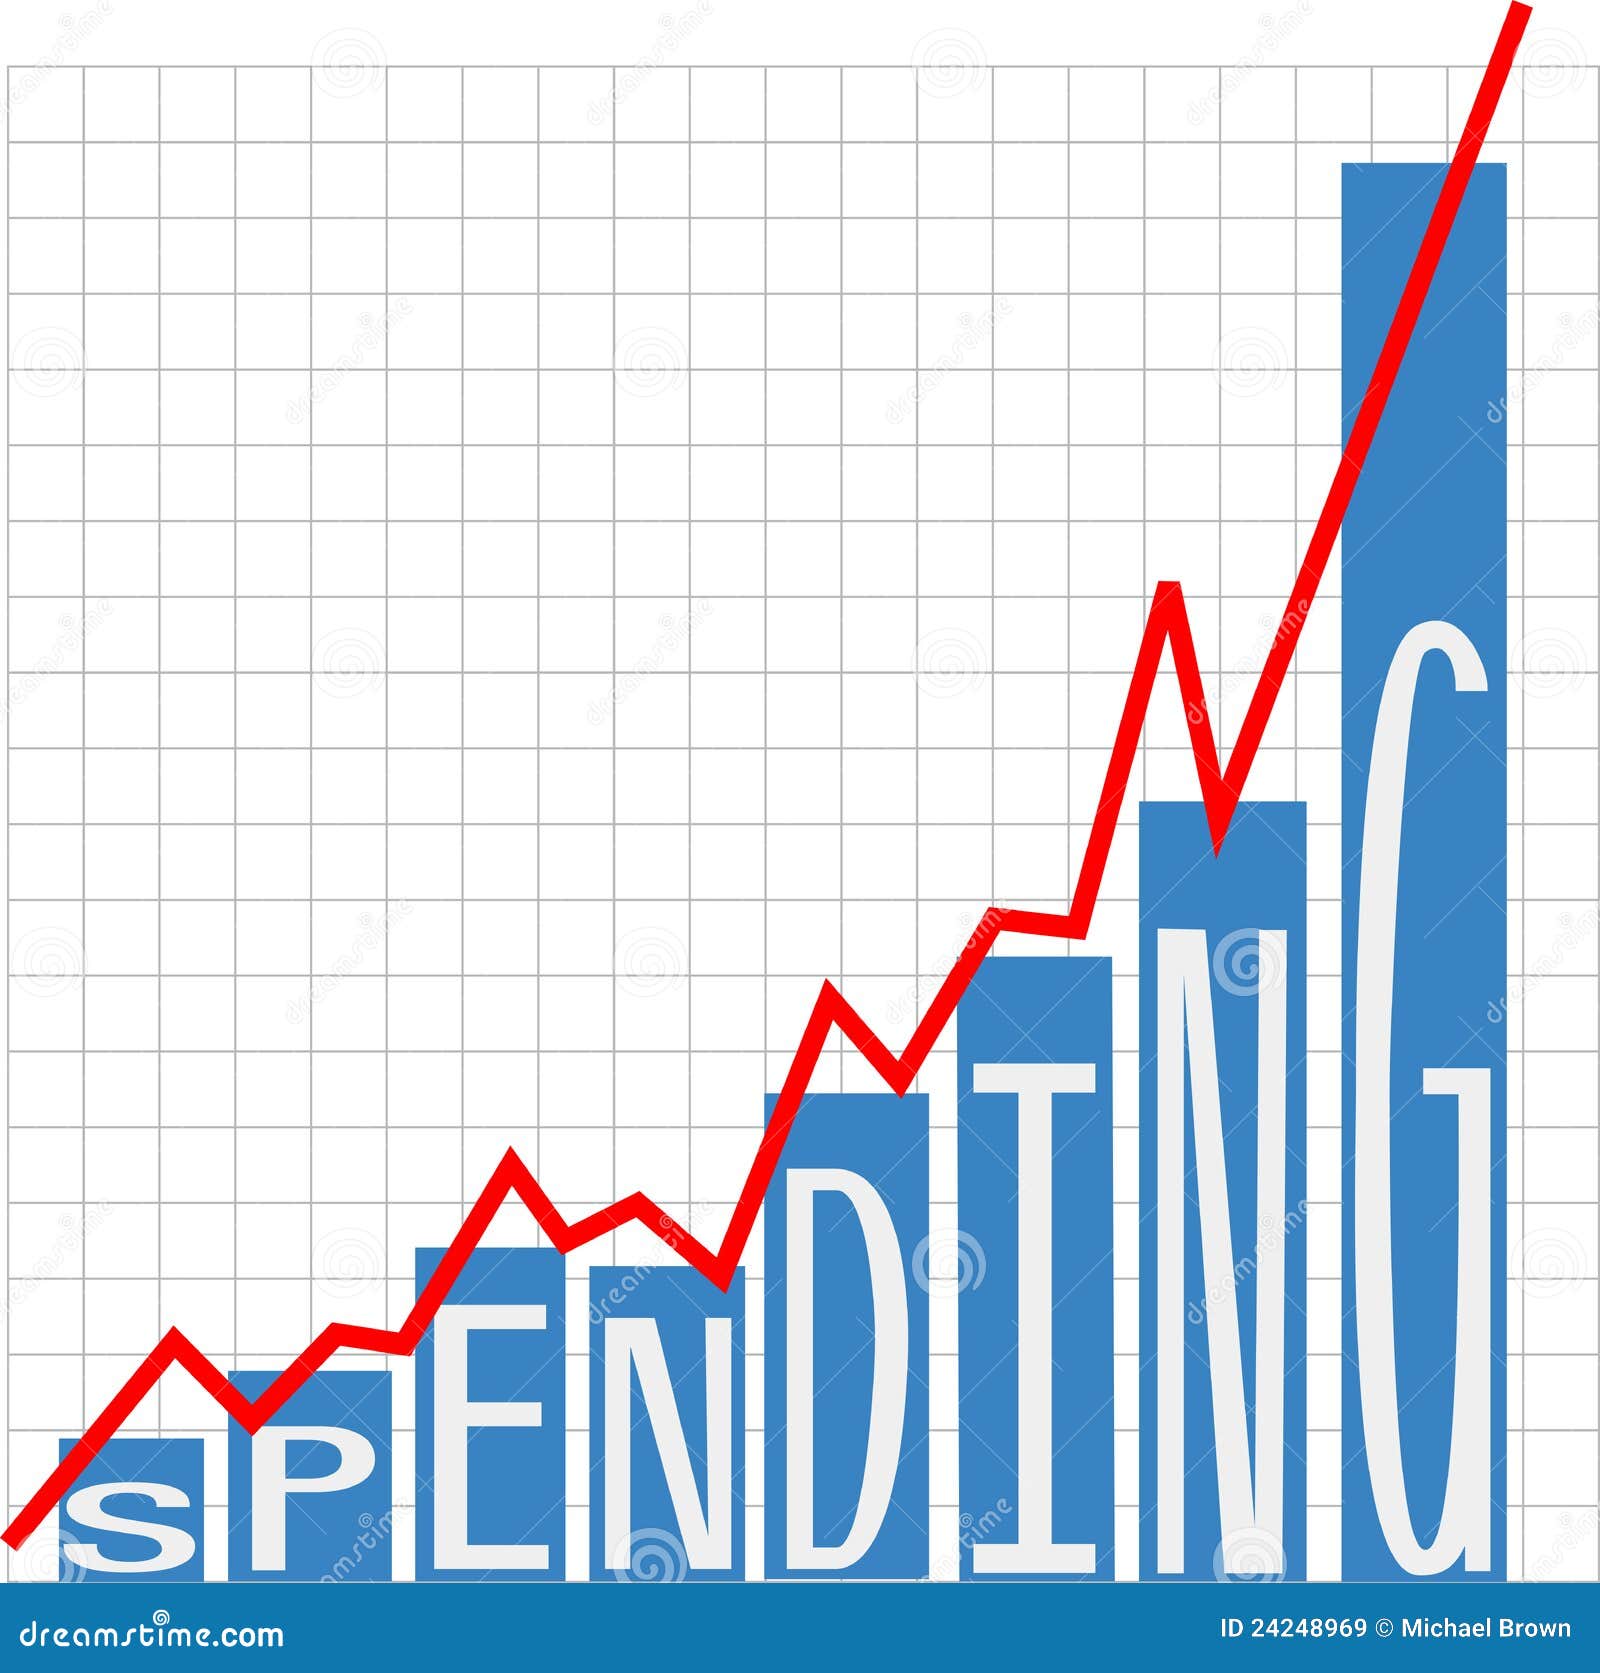 government big spending deficit chart